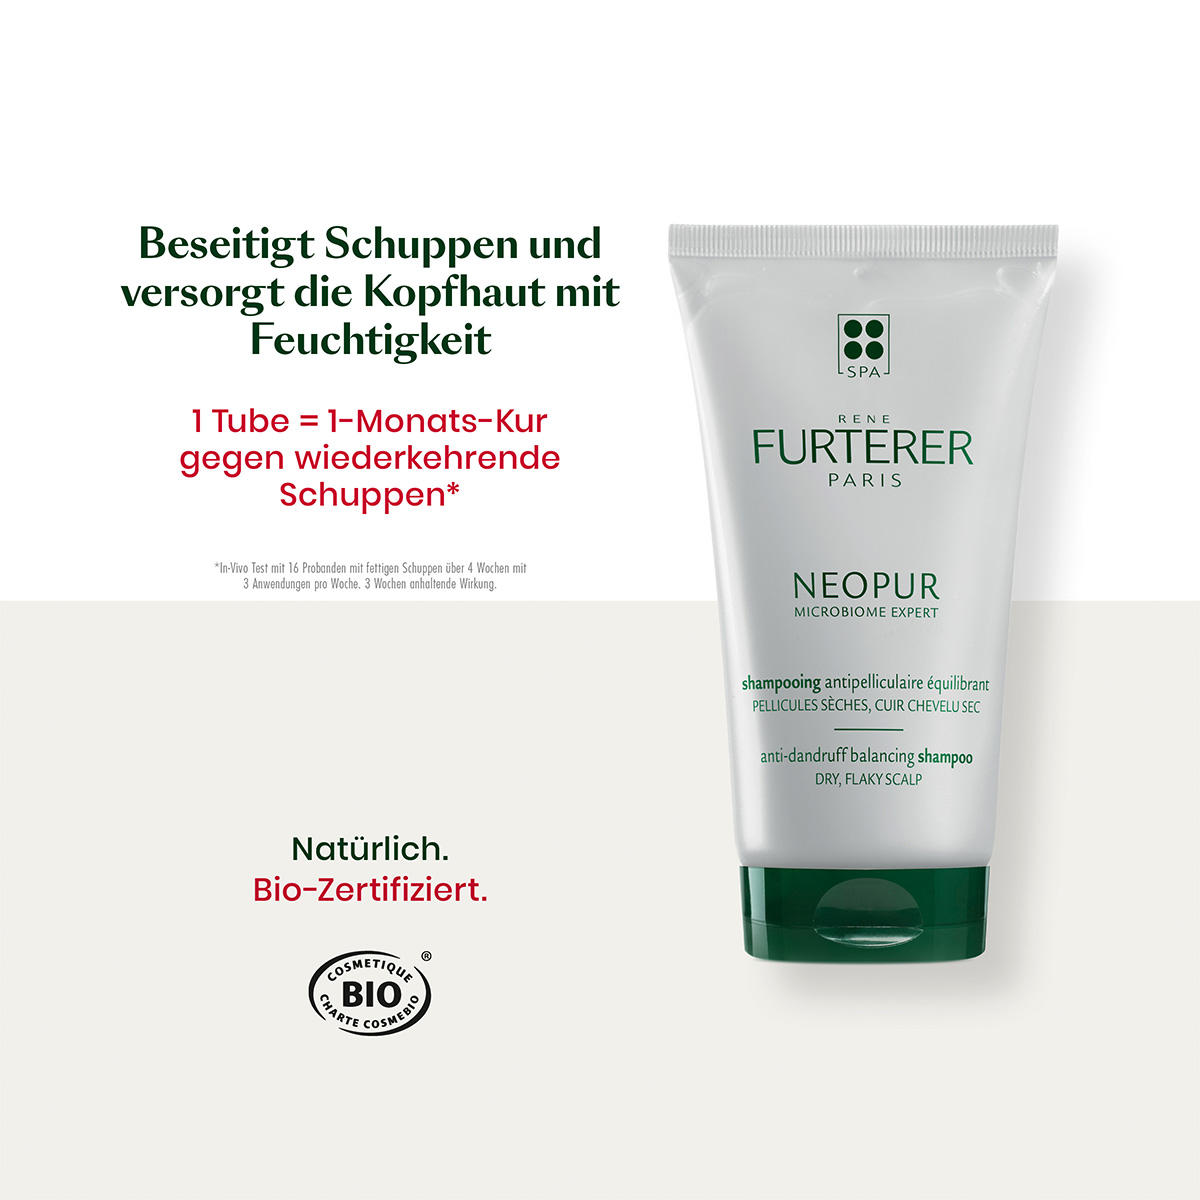 René Furterer Neopur Shampoo antiforfora equilibrante per cuoio capelluto secco 150 ml - 7